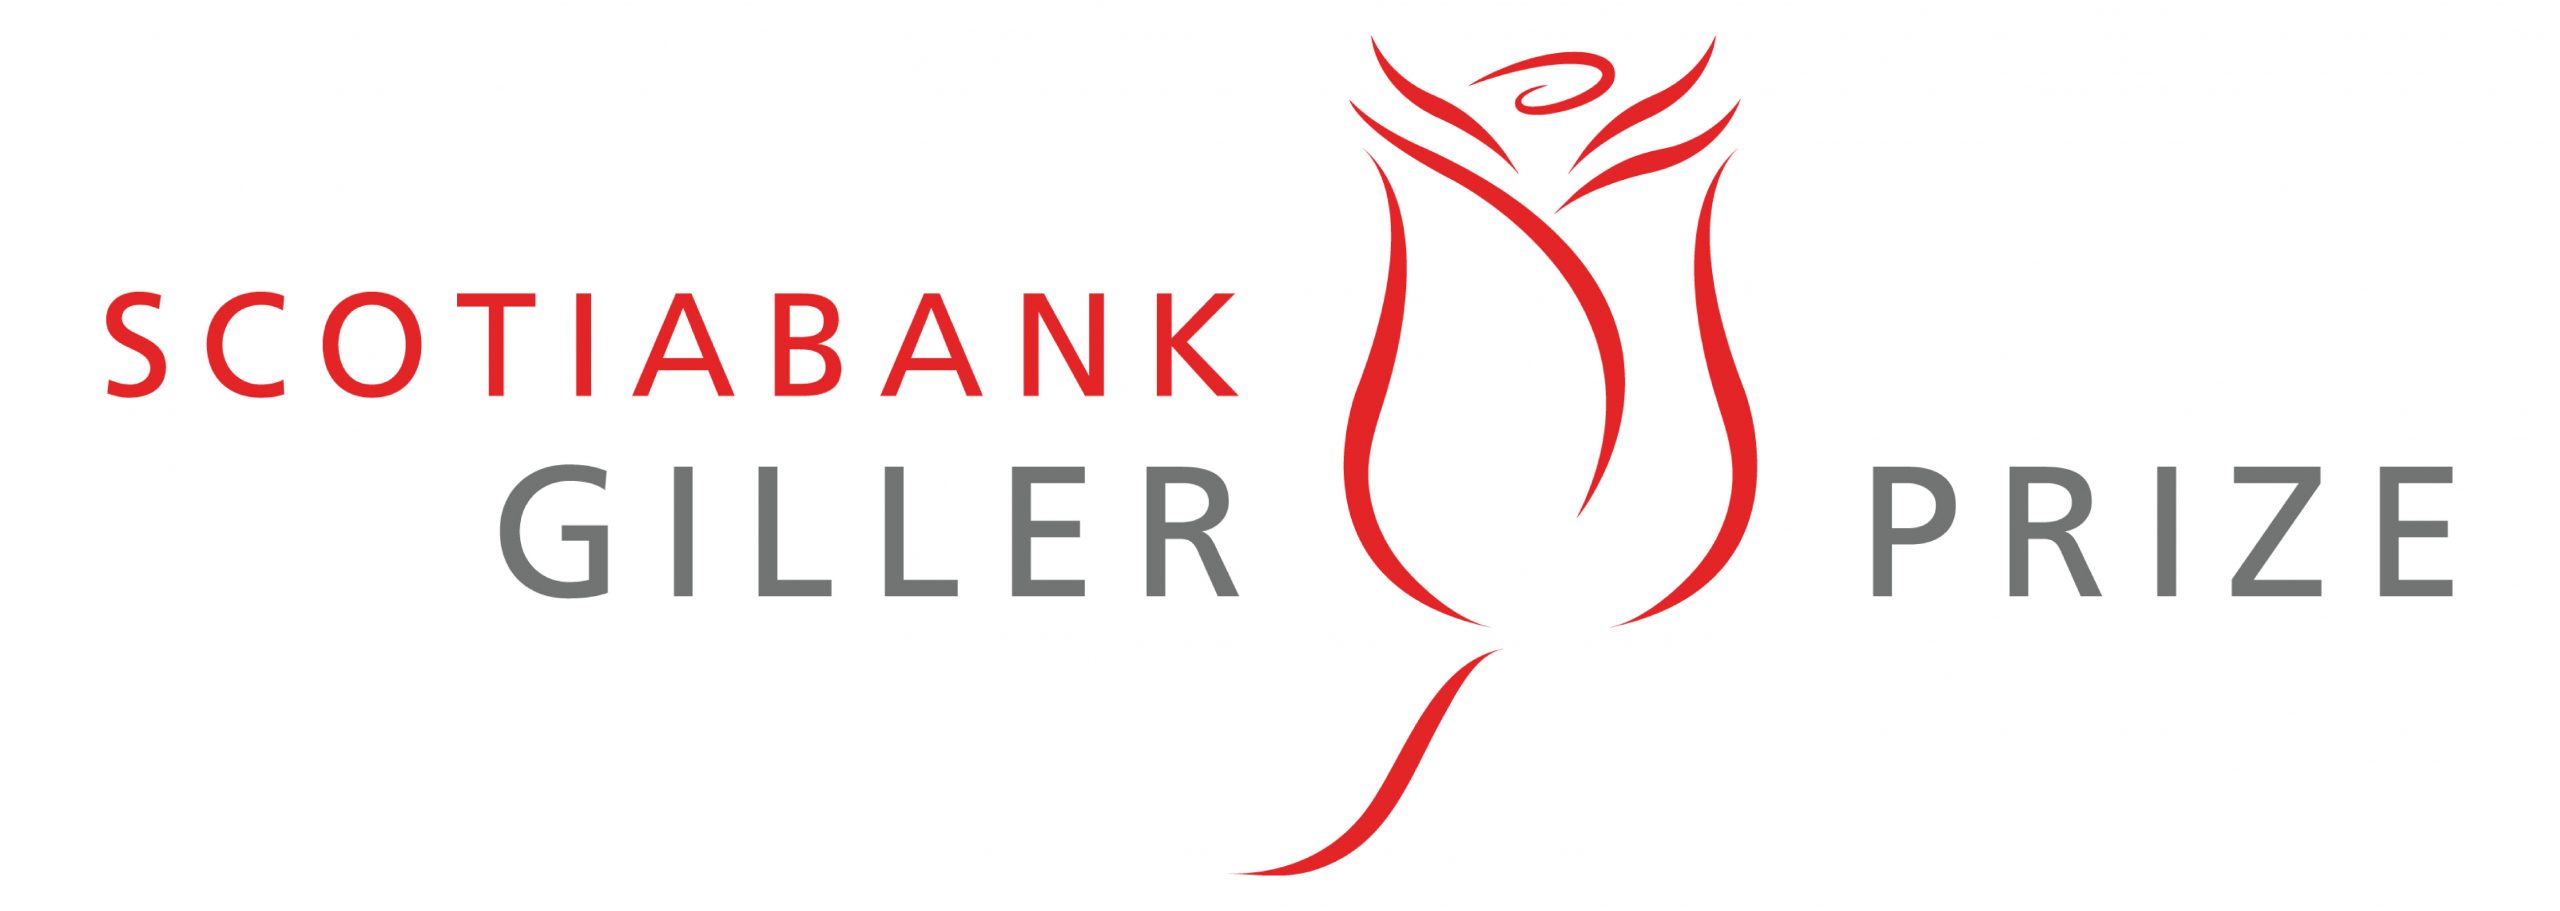 Scotiabank-Giller-Prize